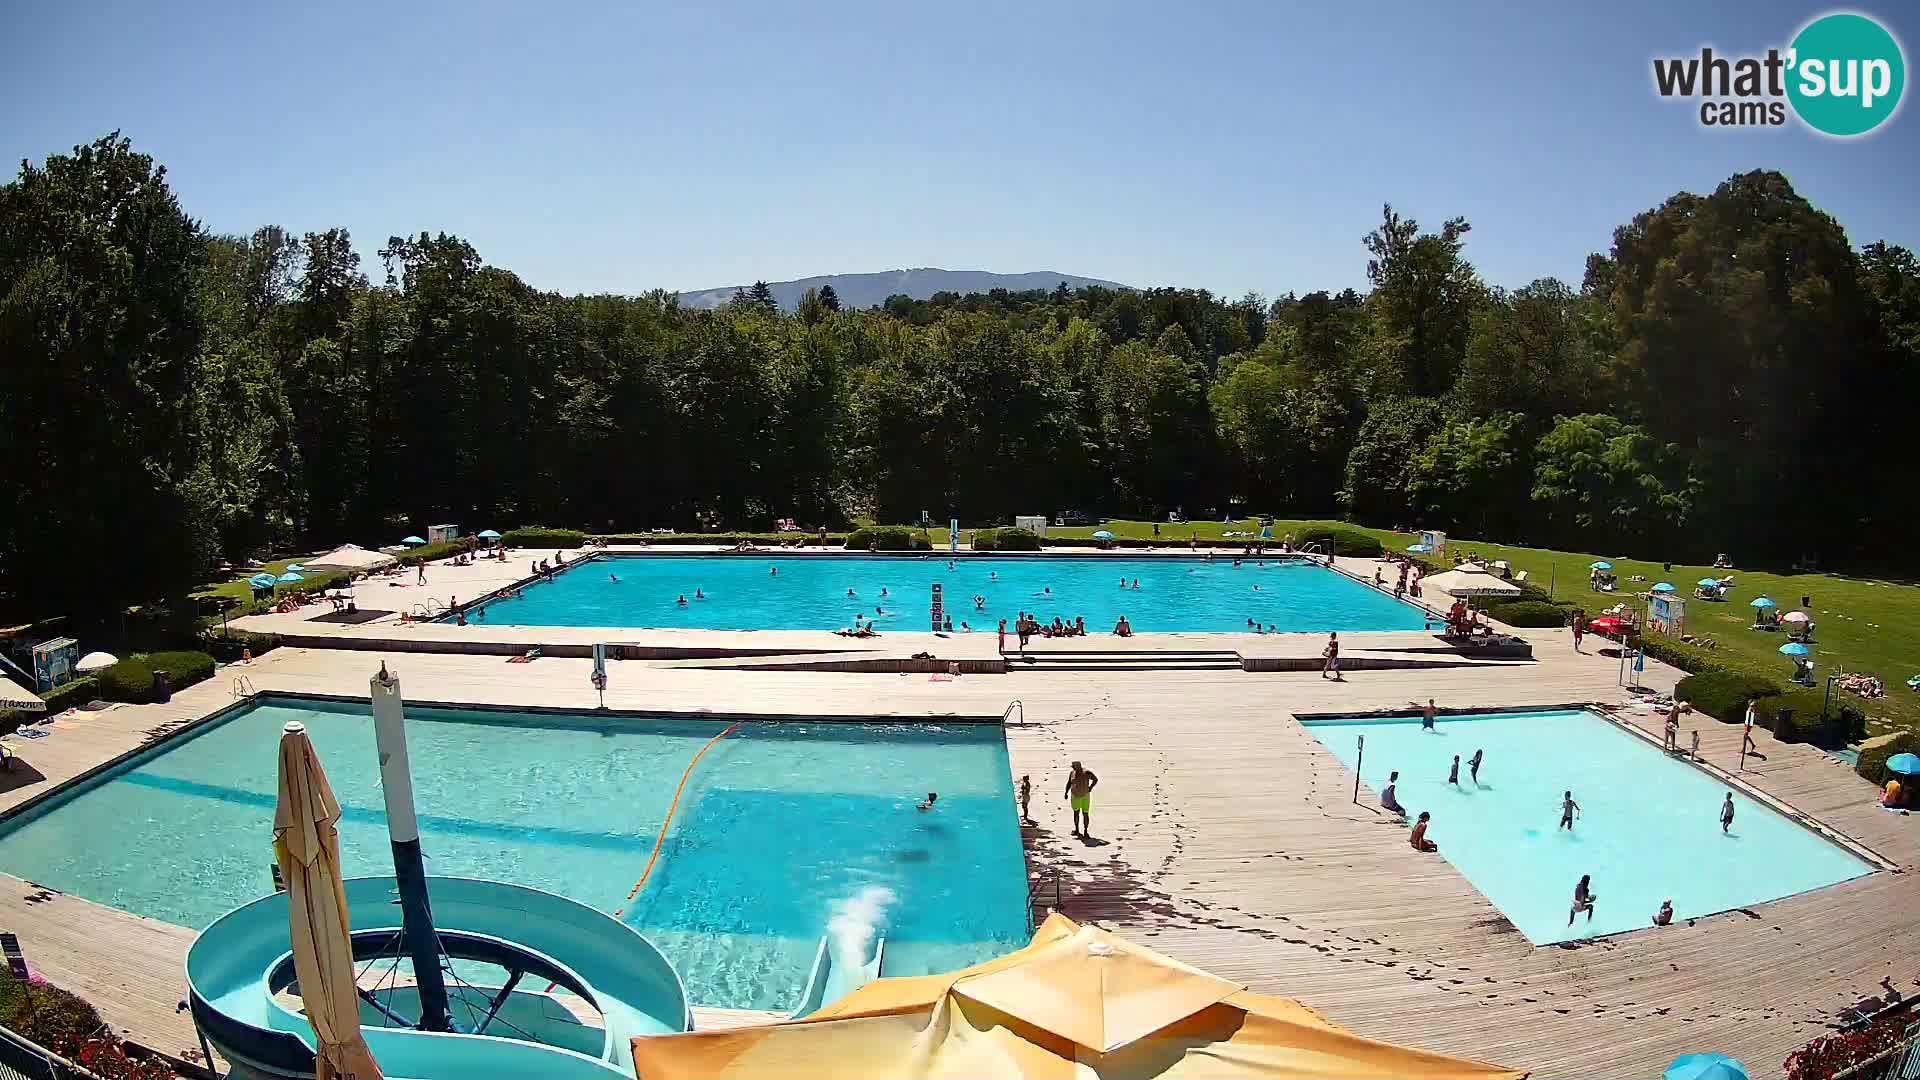 Webcam Kopališče Mariborski otok – Maribor Island Swimming Pool